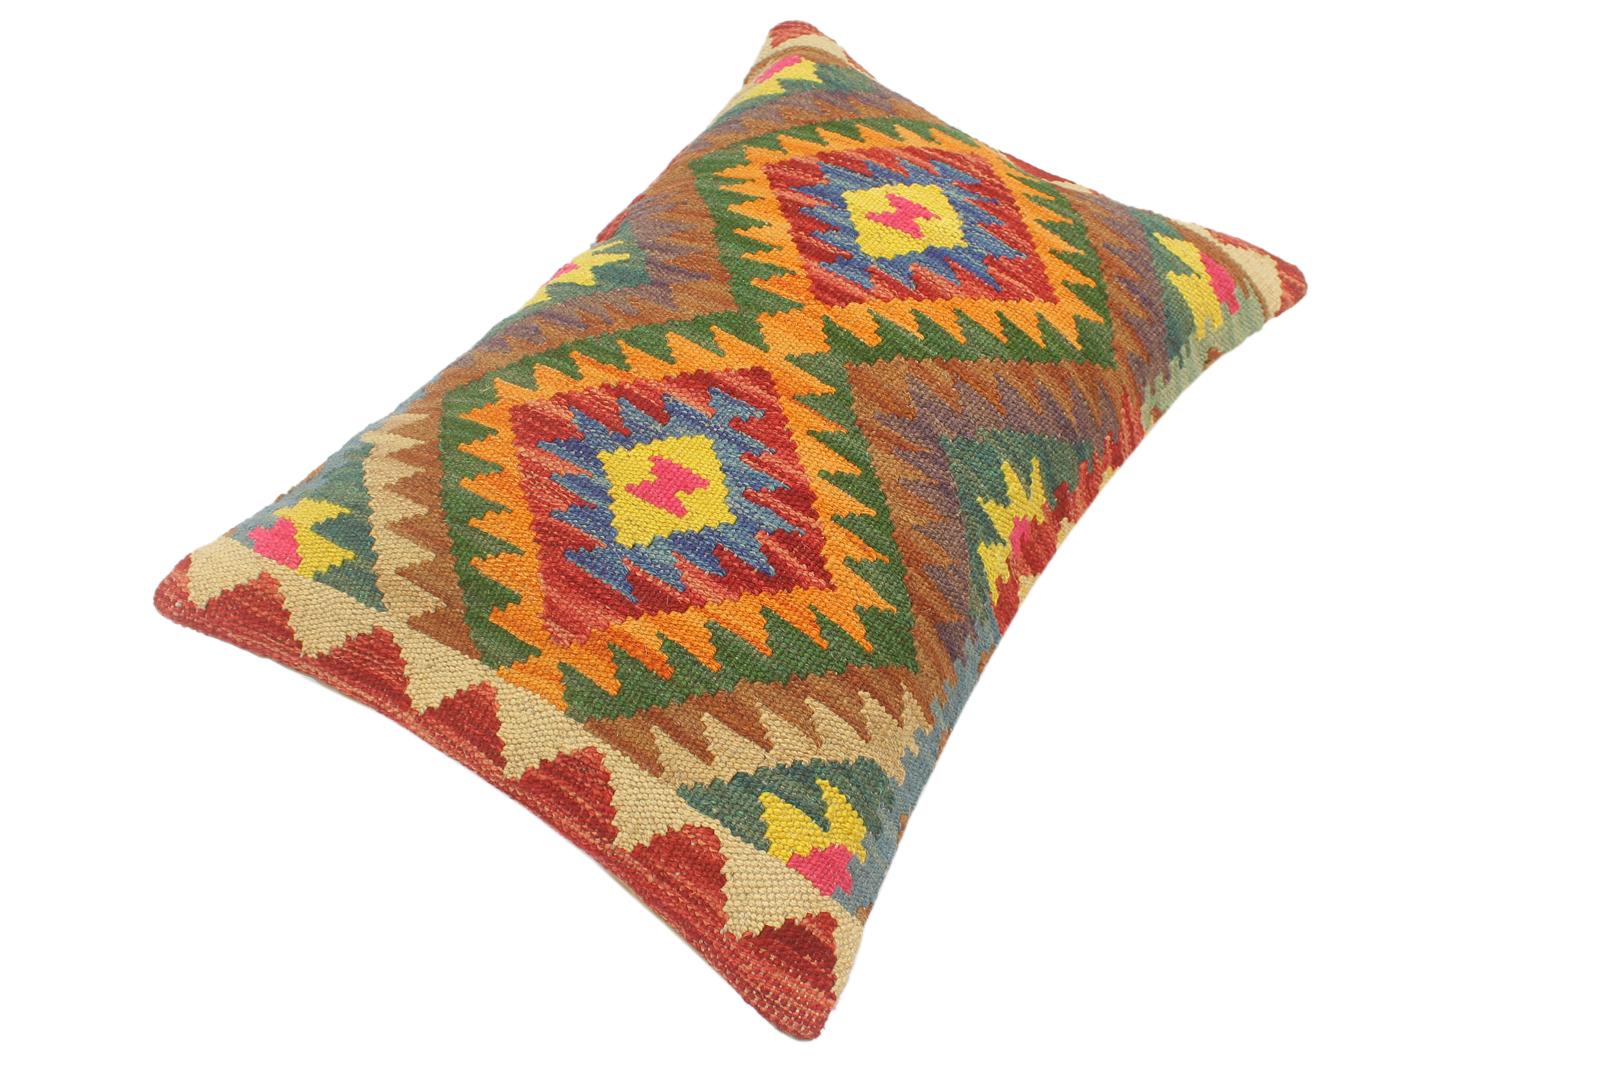 handmade Tribal Red Blue Hand-Woven RECTANGLE 100% WOOL Pillow